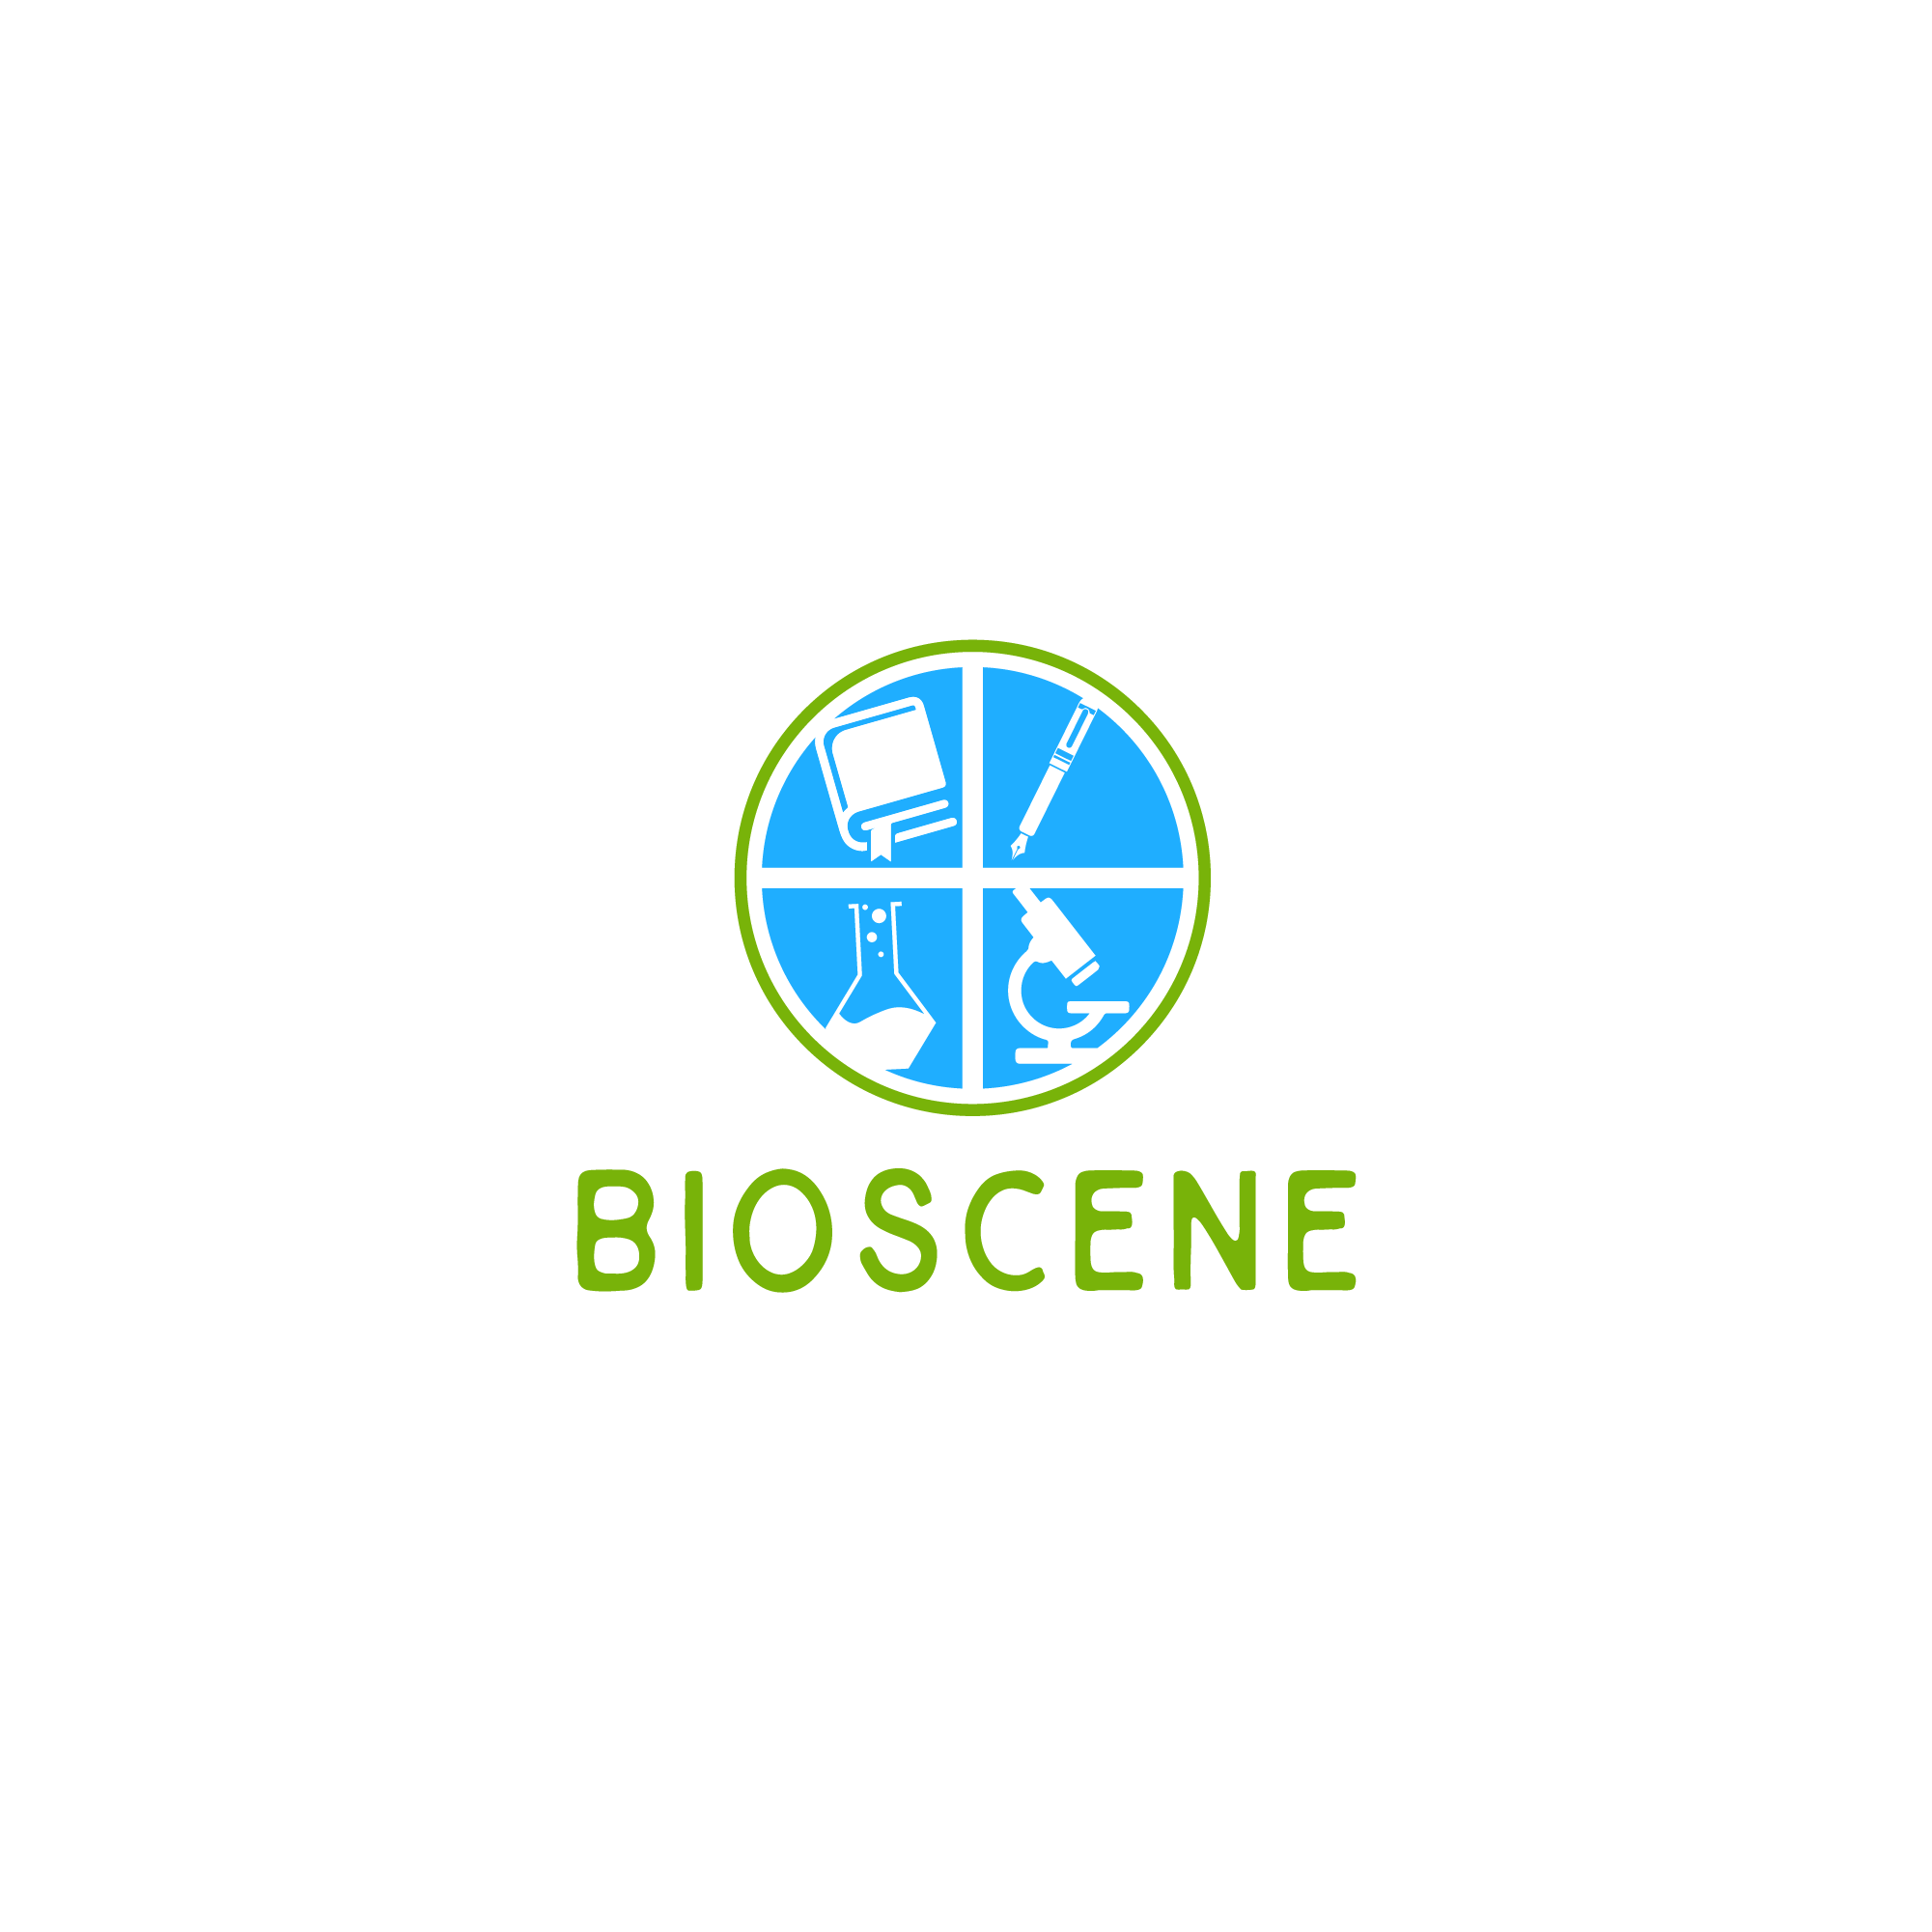 Bioscene logo vertical